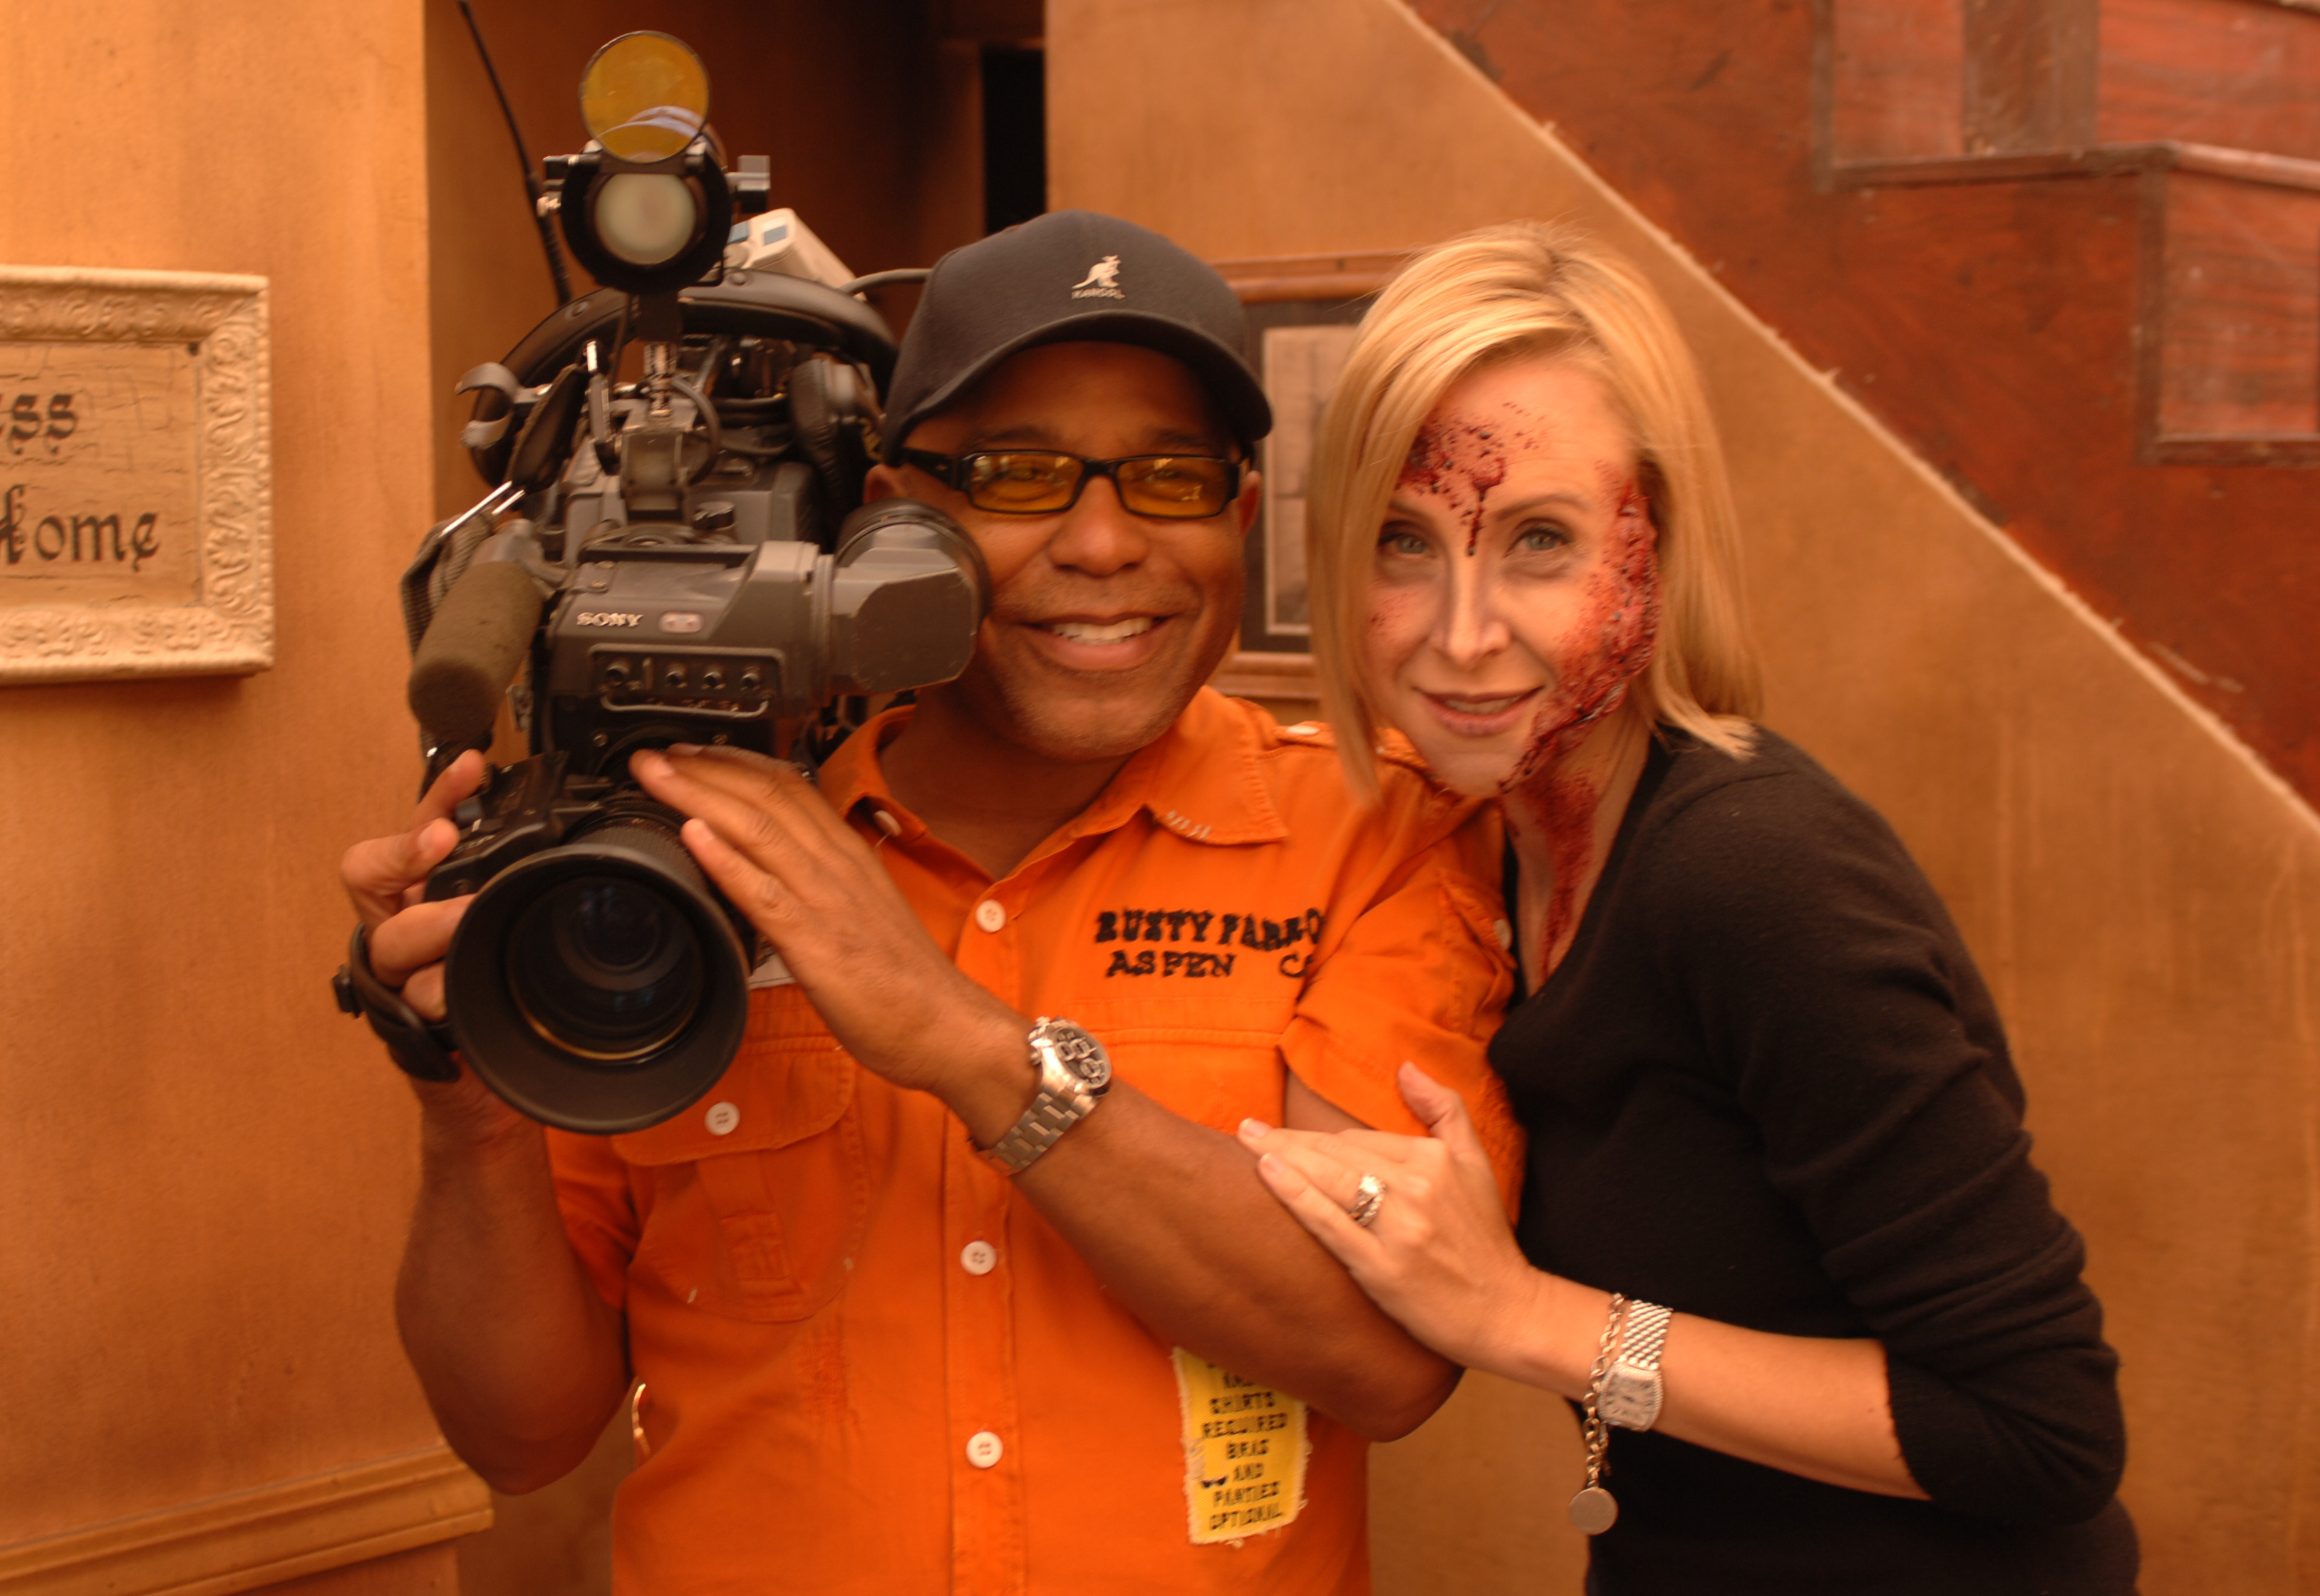 Derek M. Allen, Lisa Breckenridge on the set of Texas Chain Saw Massacre at Universal City for Good Day LA